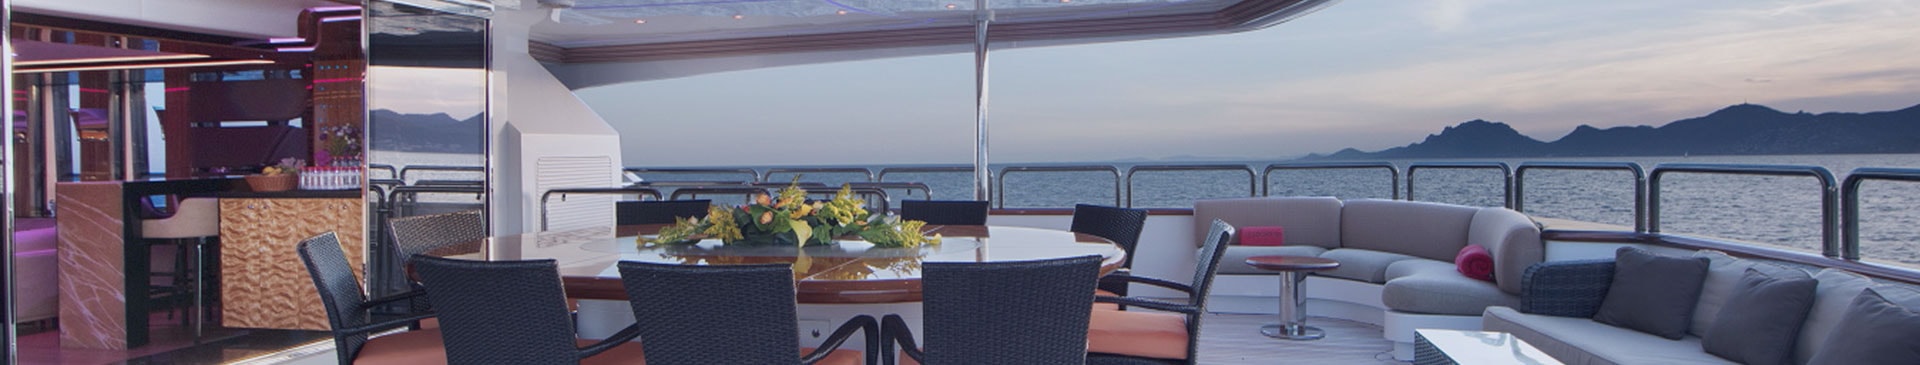 Arrange Your Dream Wedding on a Luxury Yacht